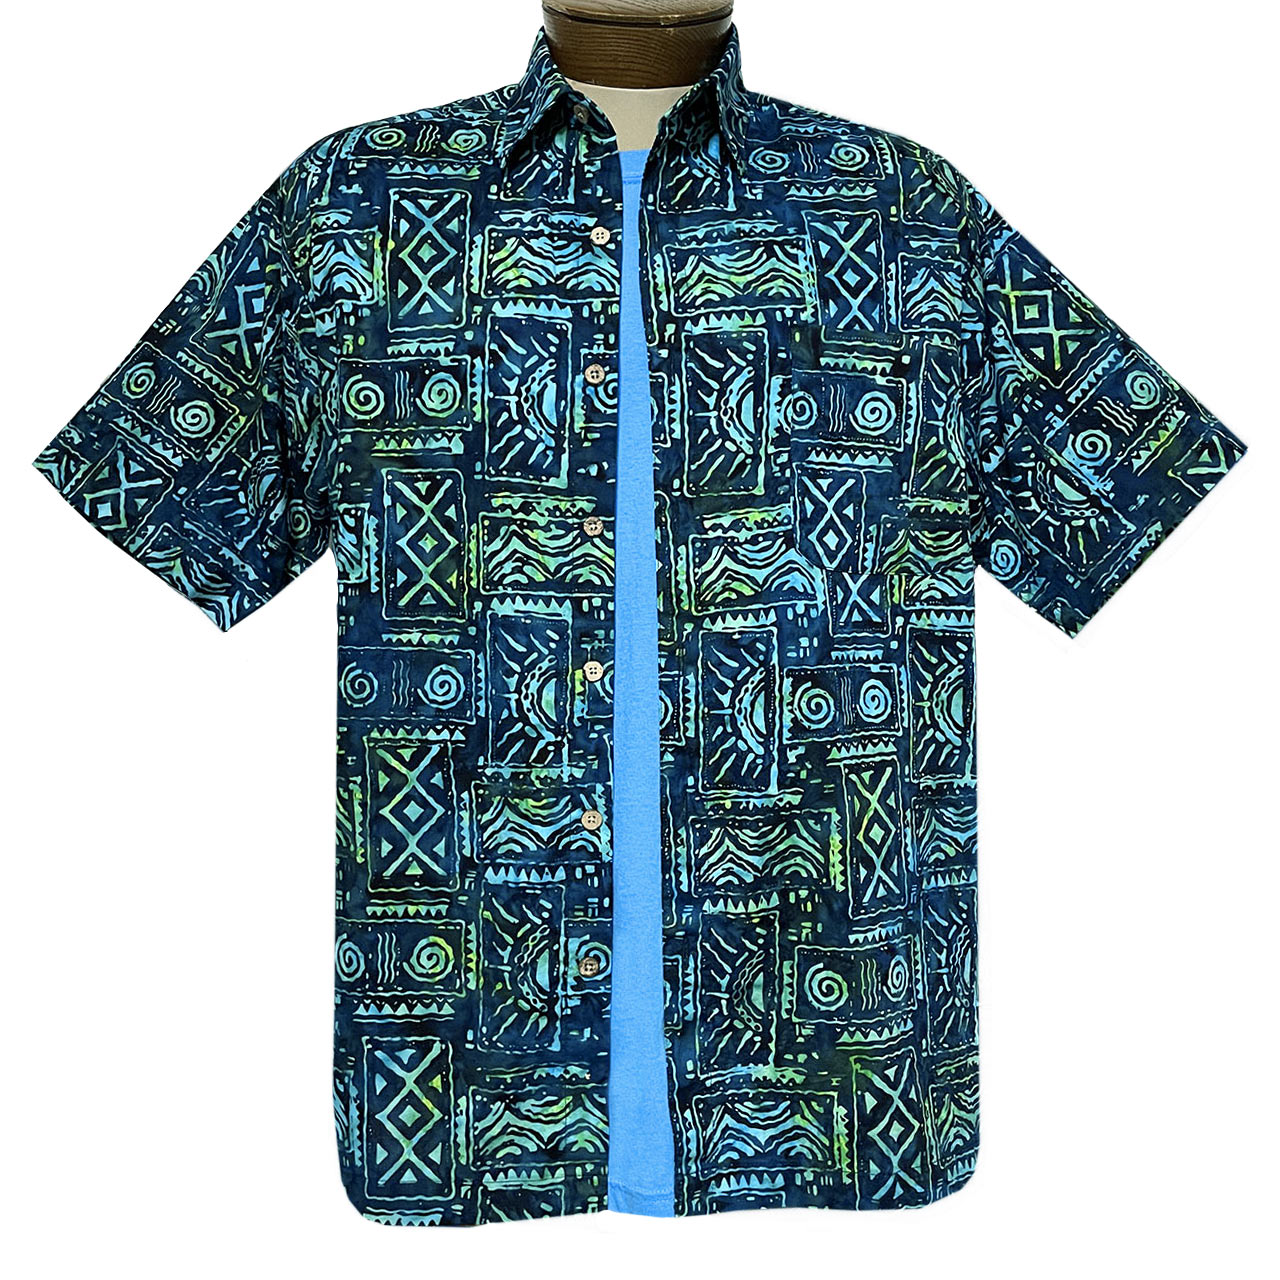 Men's R. Options Batik Short Sleeve Cotton Shirt, Totem Squares 62340-4 Green/Royal/Navy